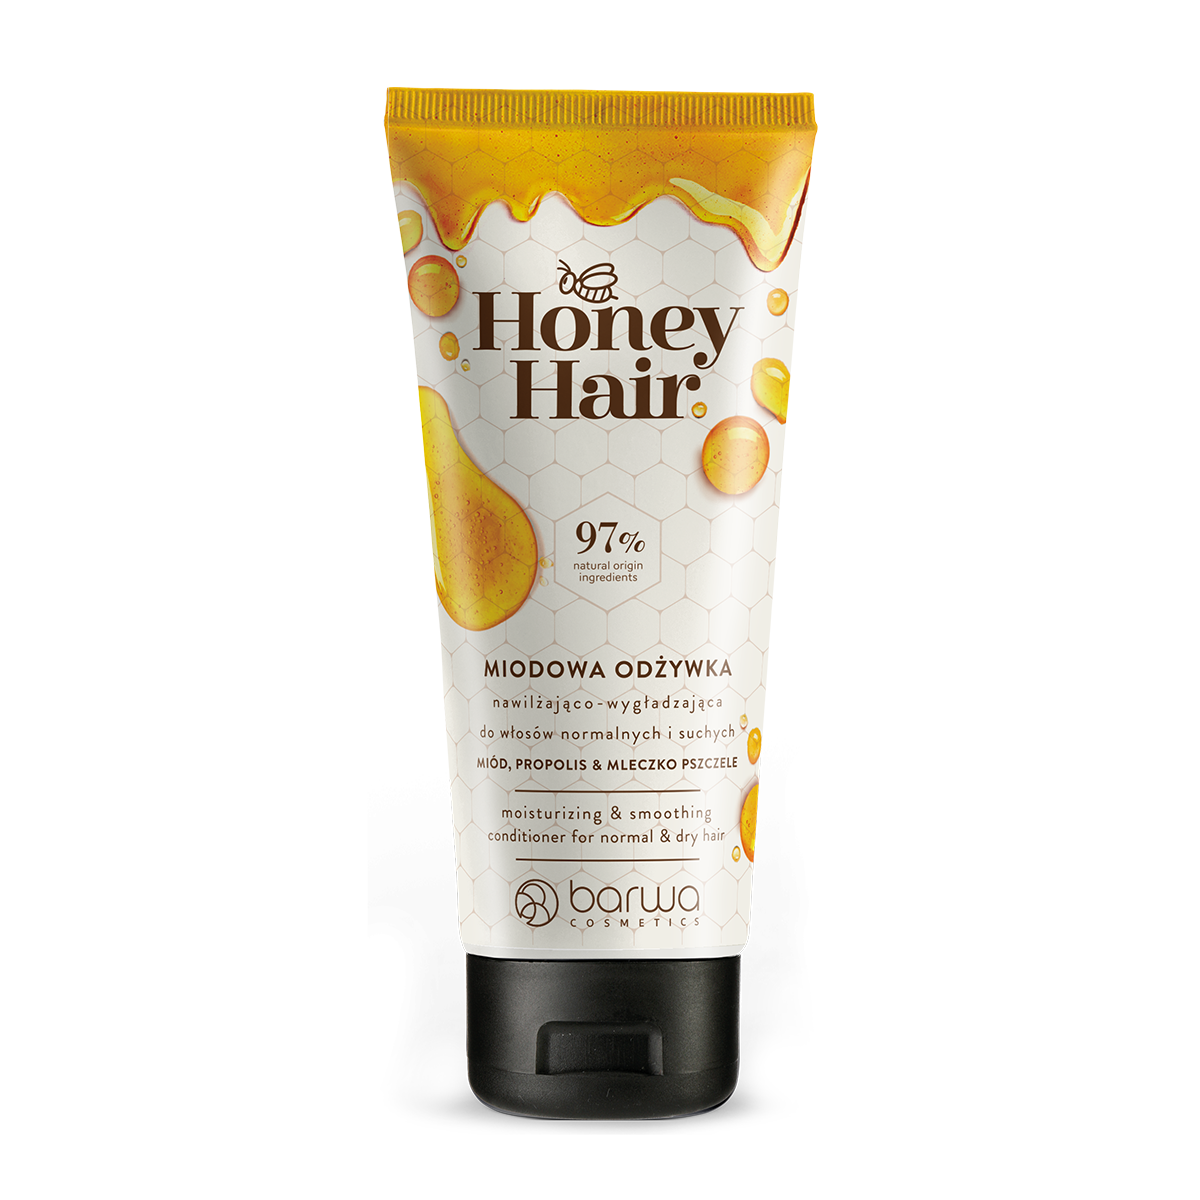 Увлажняющий и разглаживающий кондиционер для волос Barwa Honey Hair, 200 мл